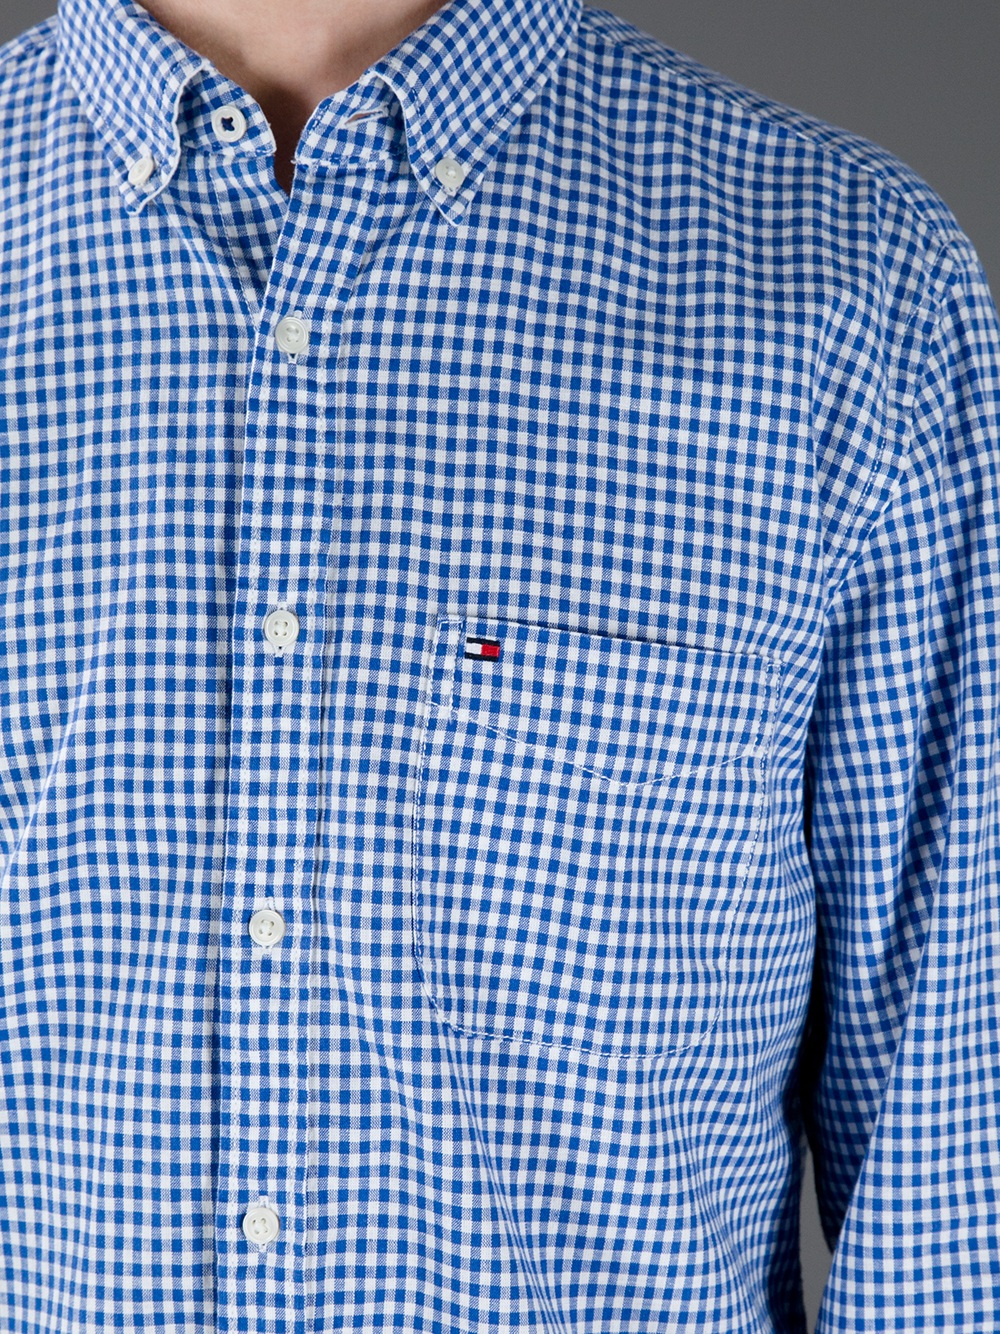 TOMMY HILFIGER Mens Dress Shirt Blue/White Checkers #82 